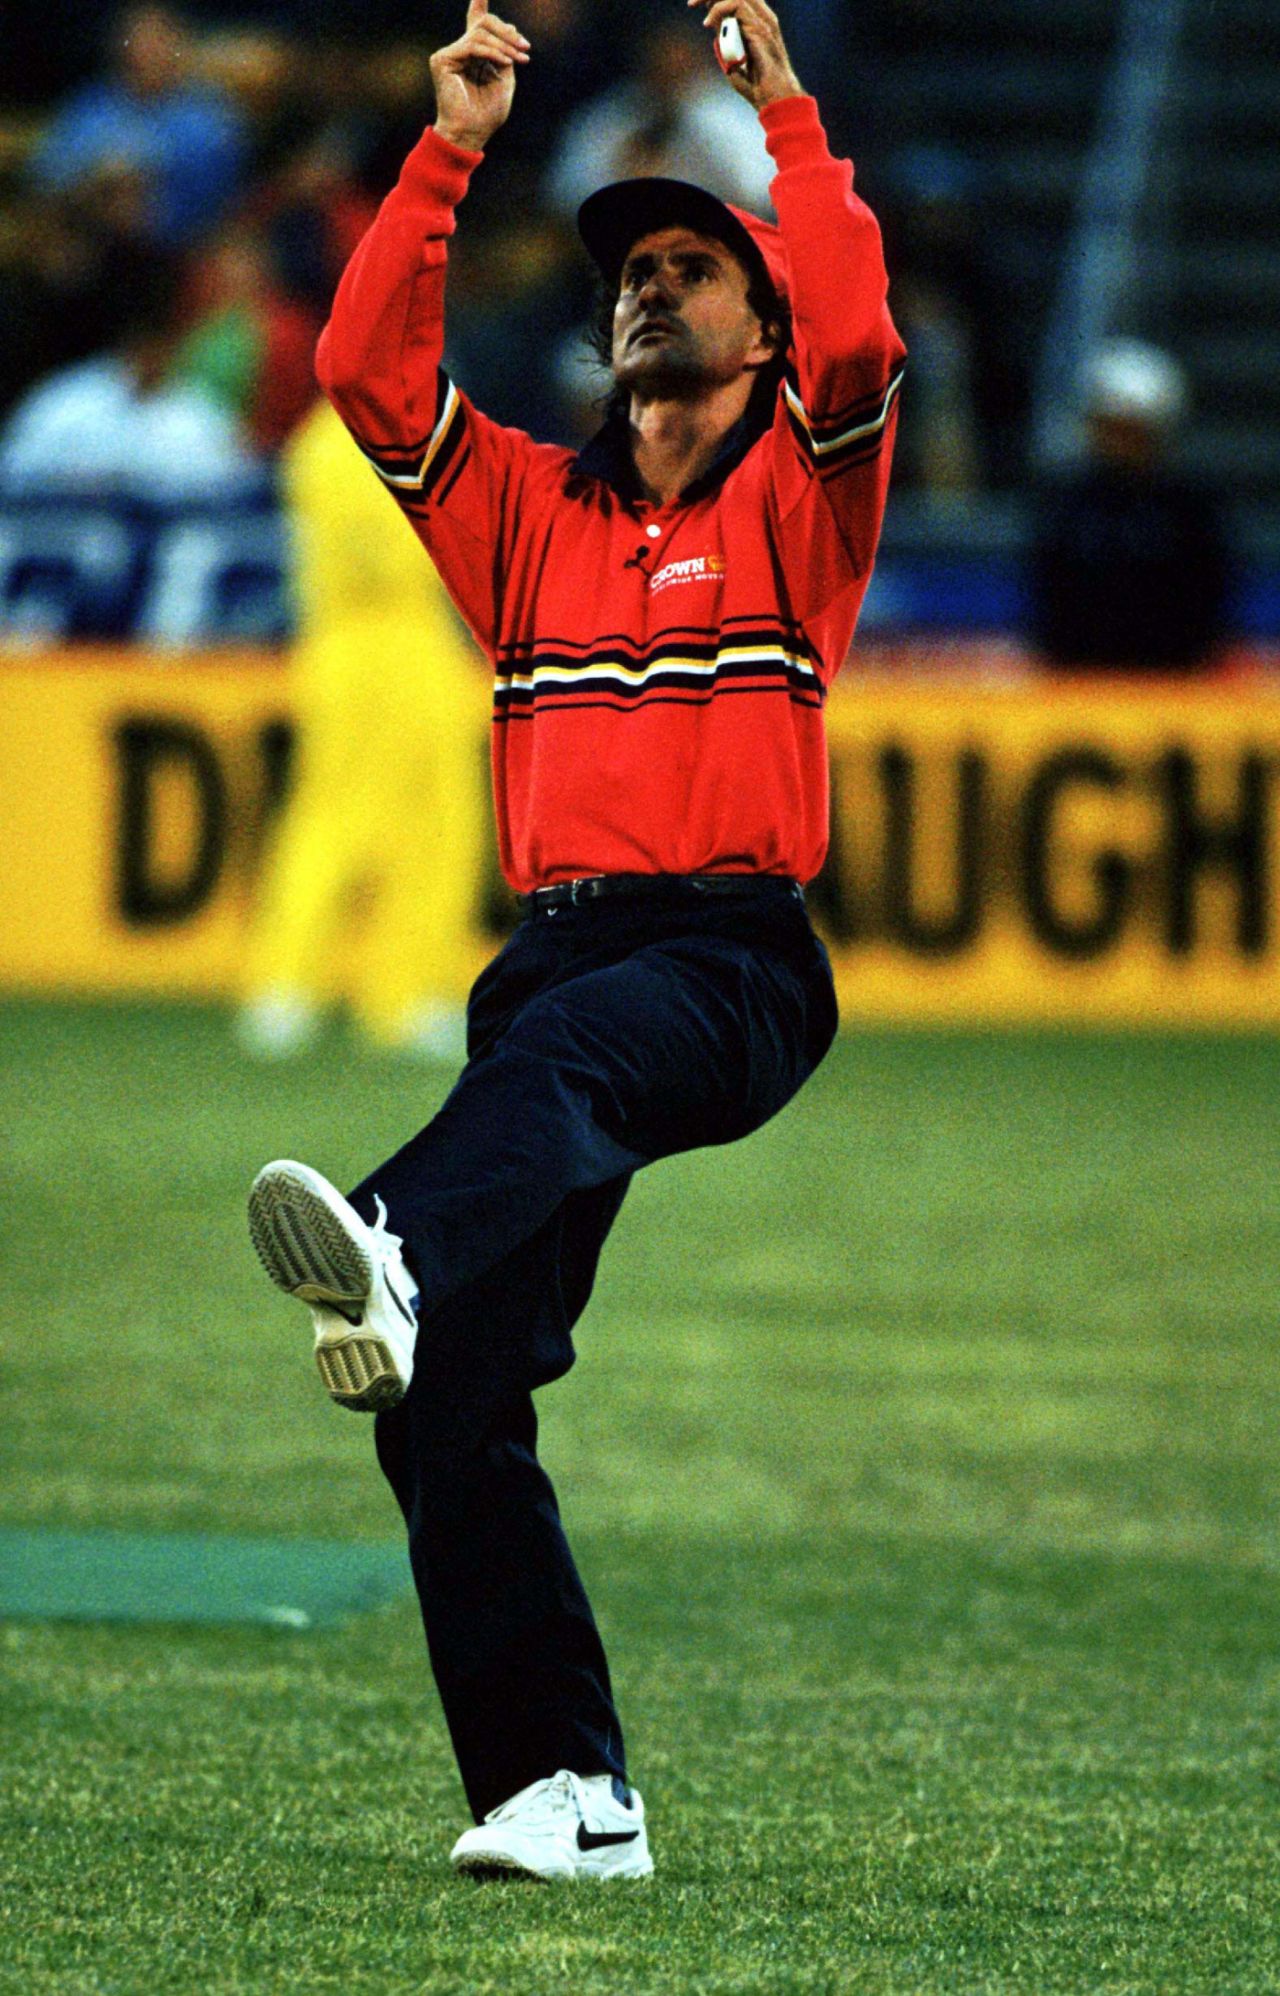 Billy Bowden signals a six, Cricket Max Tournament, June 18, 1997